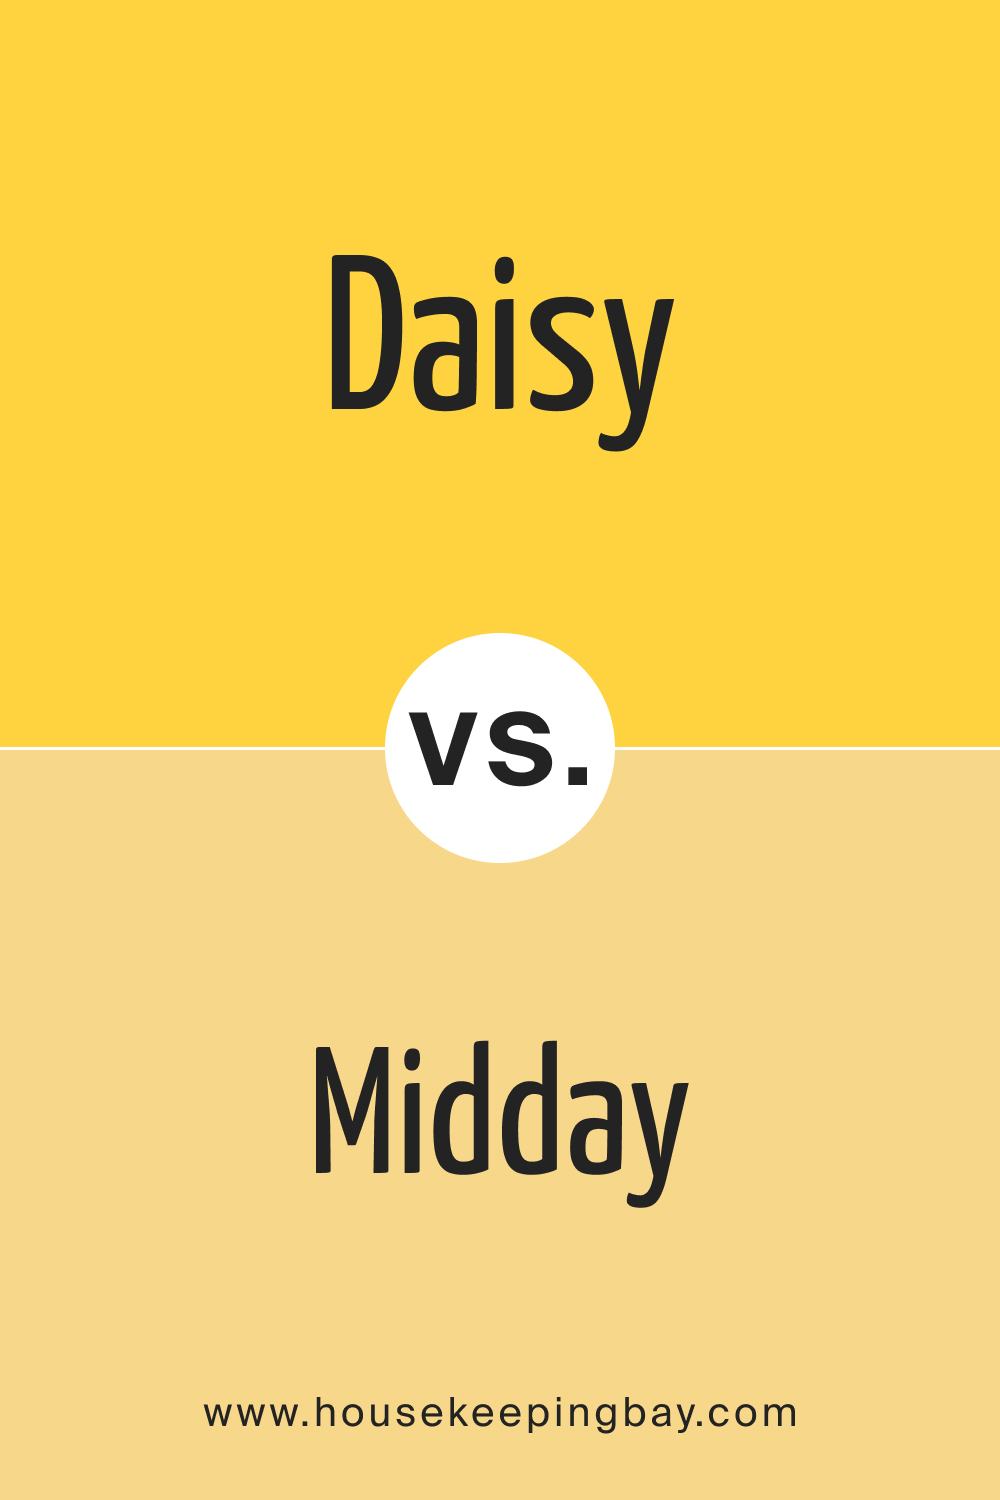 Daisy SW 6910 vs SW 6695 Midday